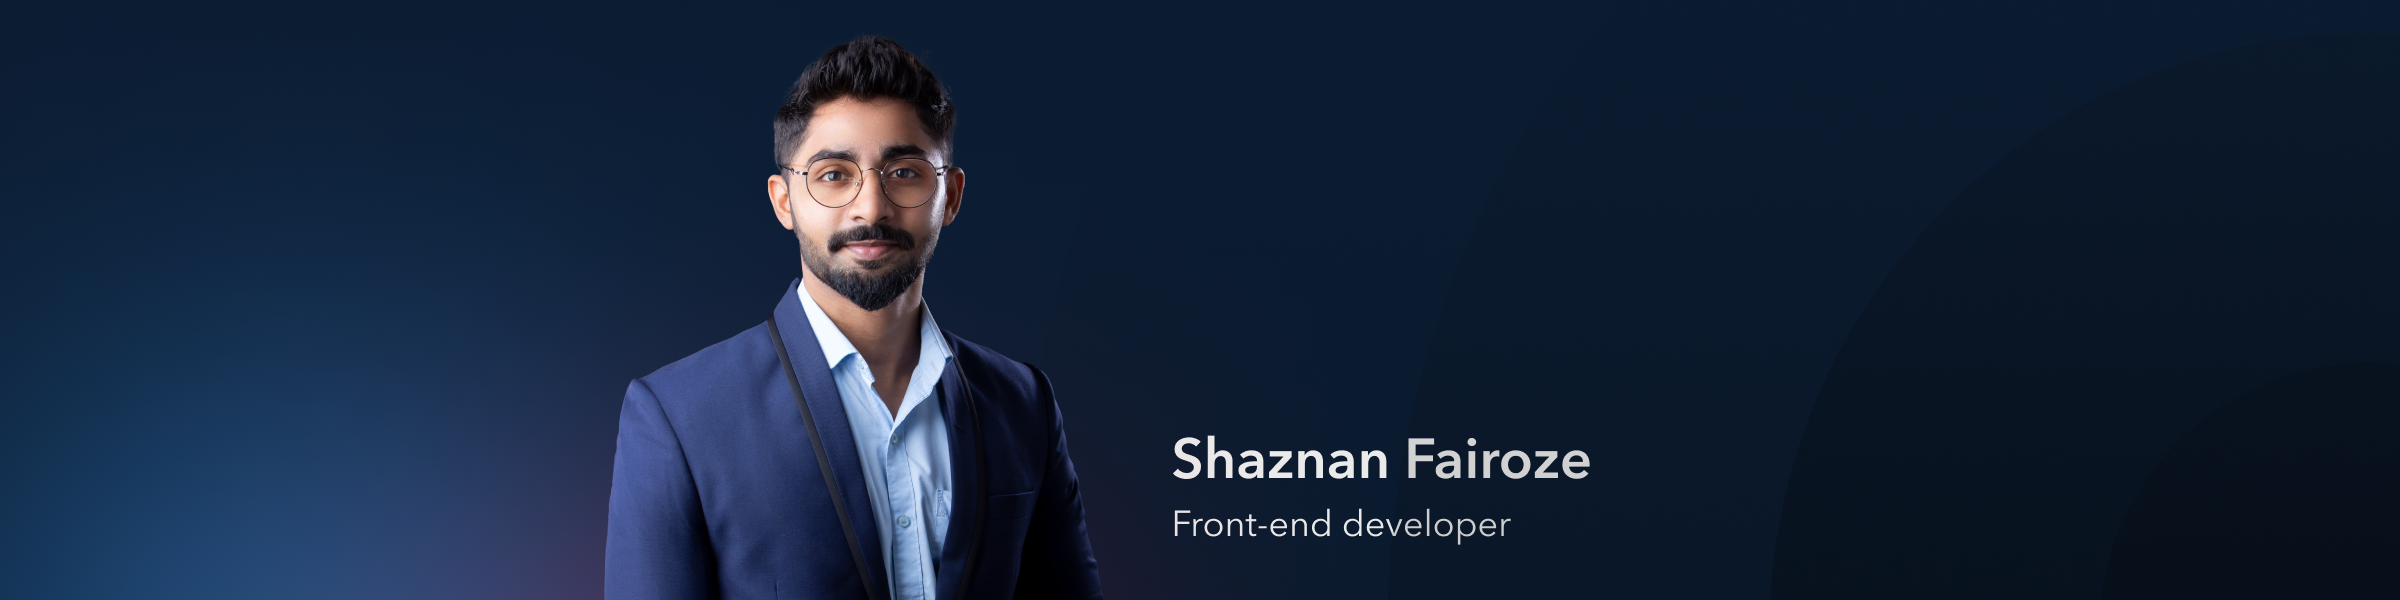 meet team openprovider: shaznan